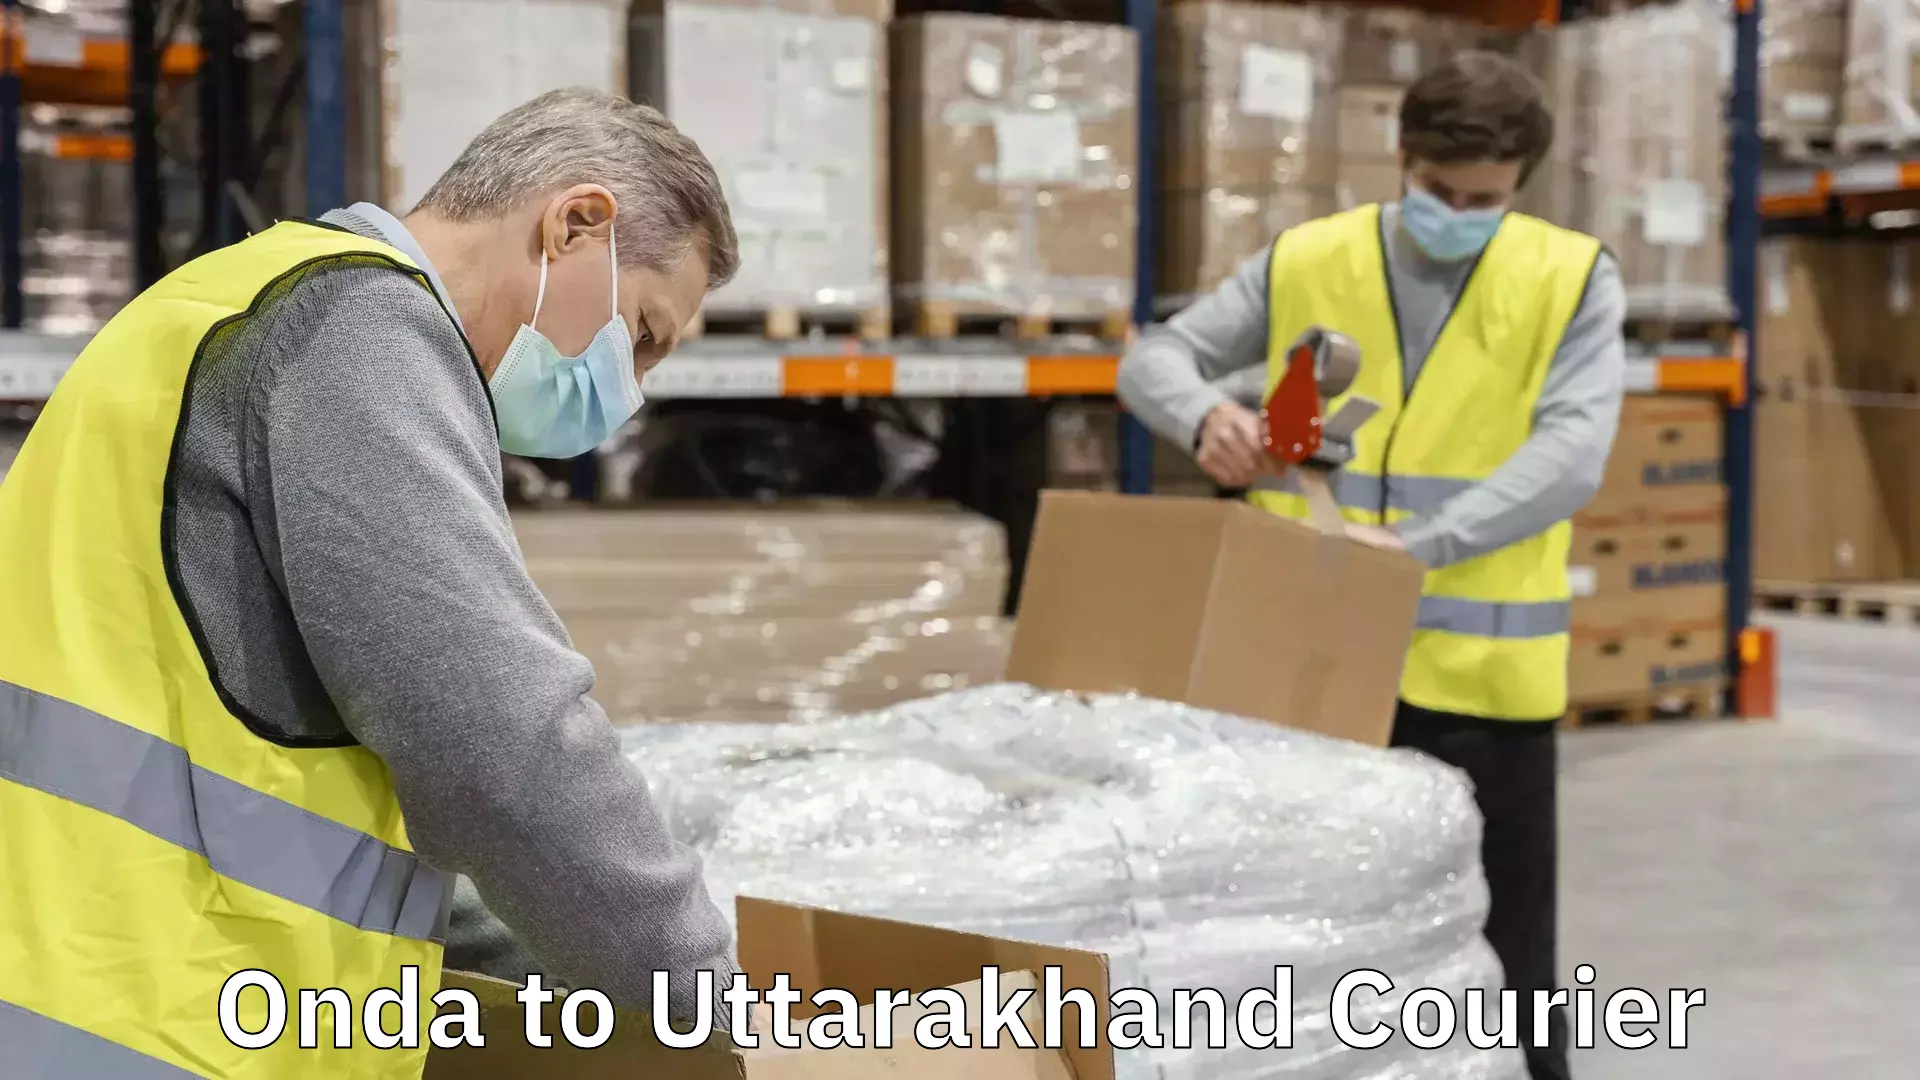 Courier service partnerships in Onda to Uttarakhand